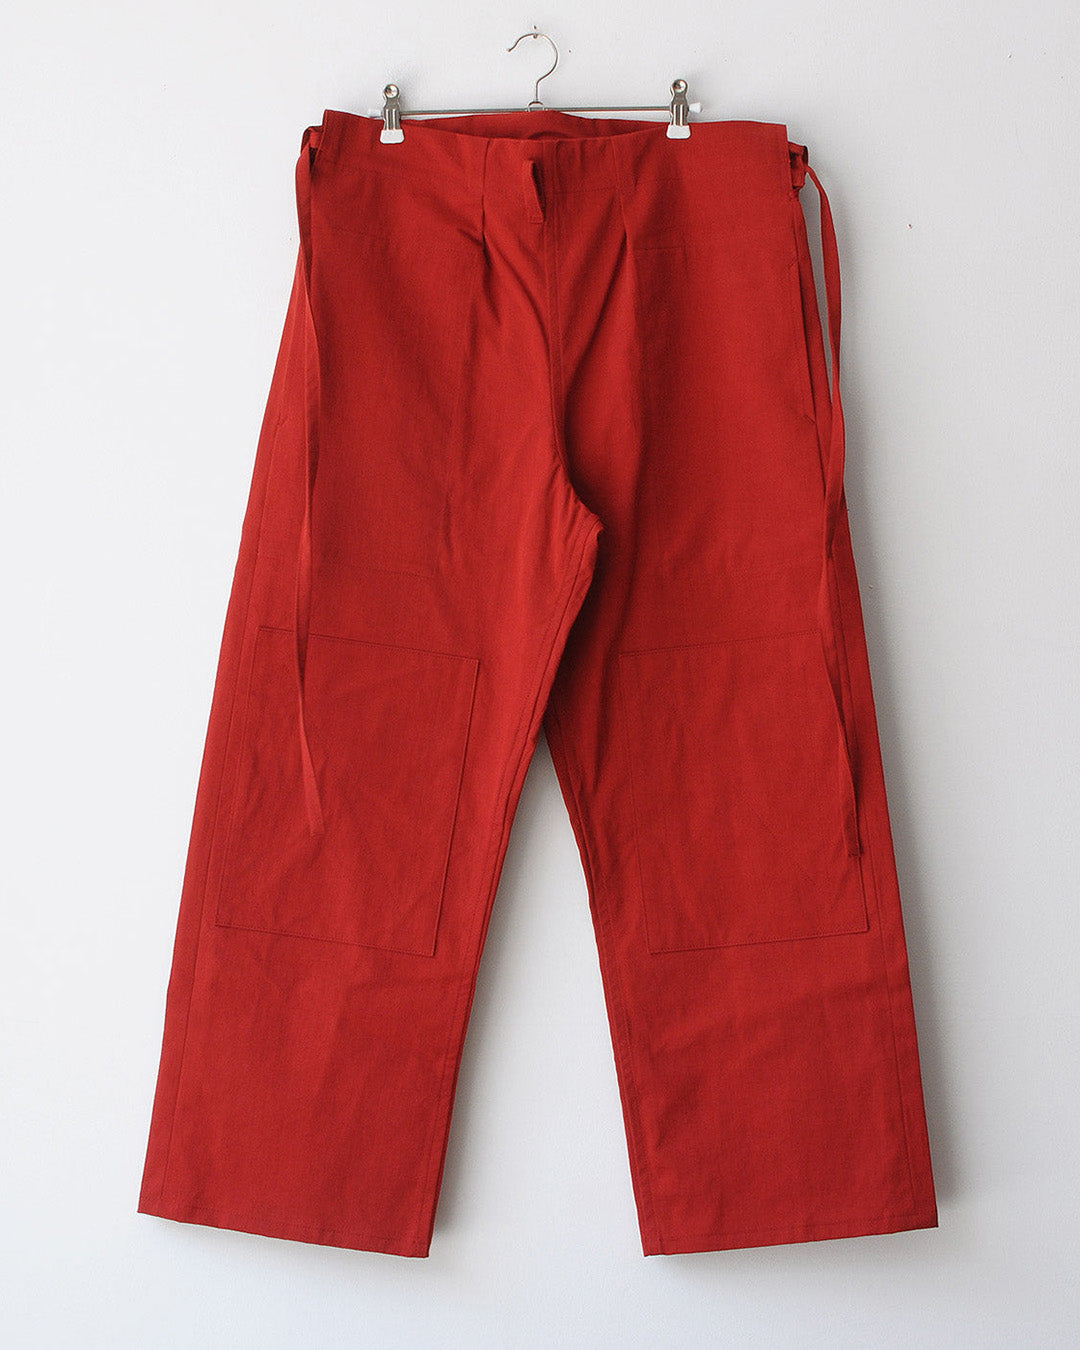 TUKI karate pants / red / solid twill